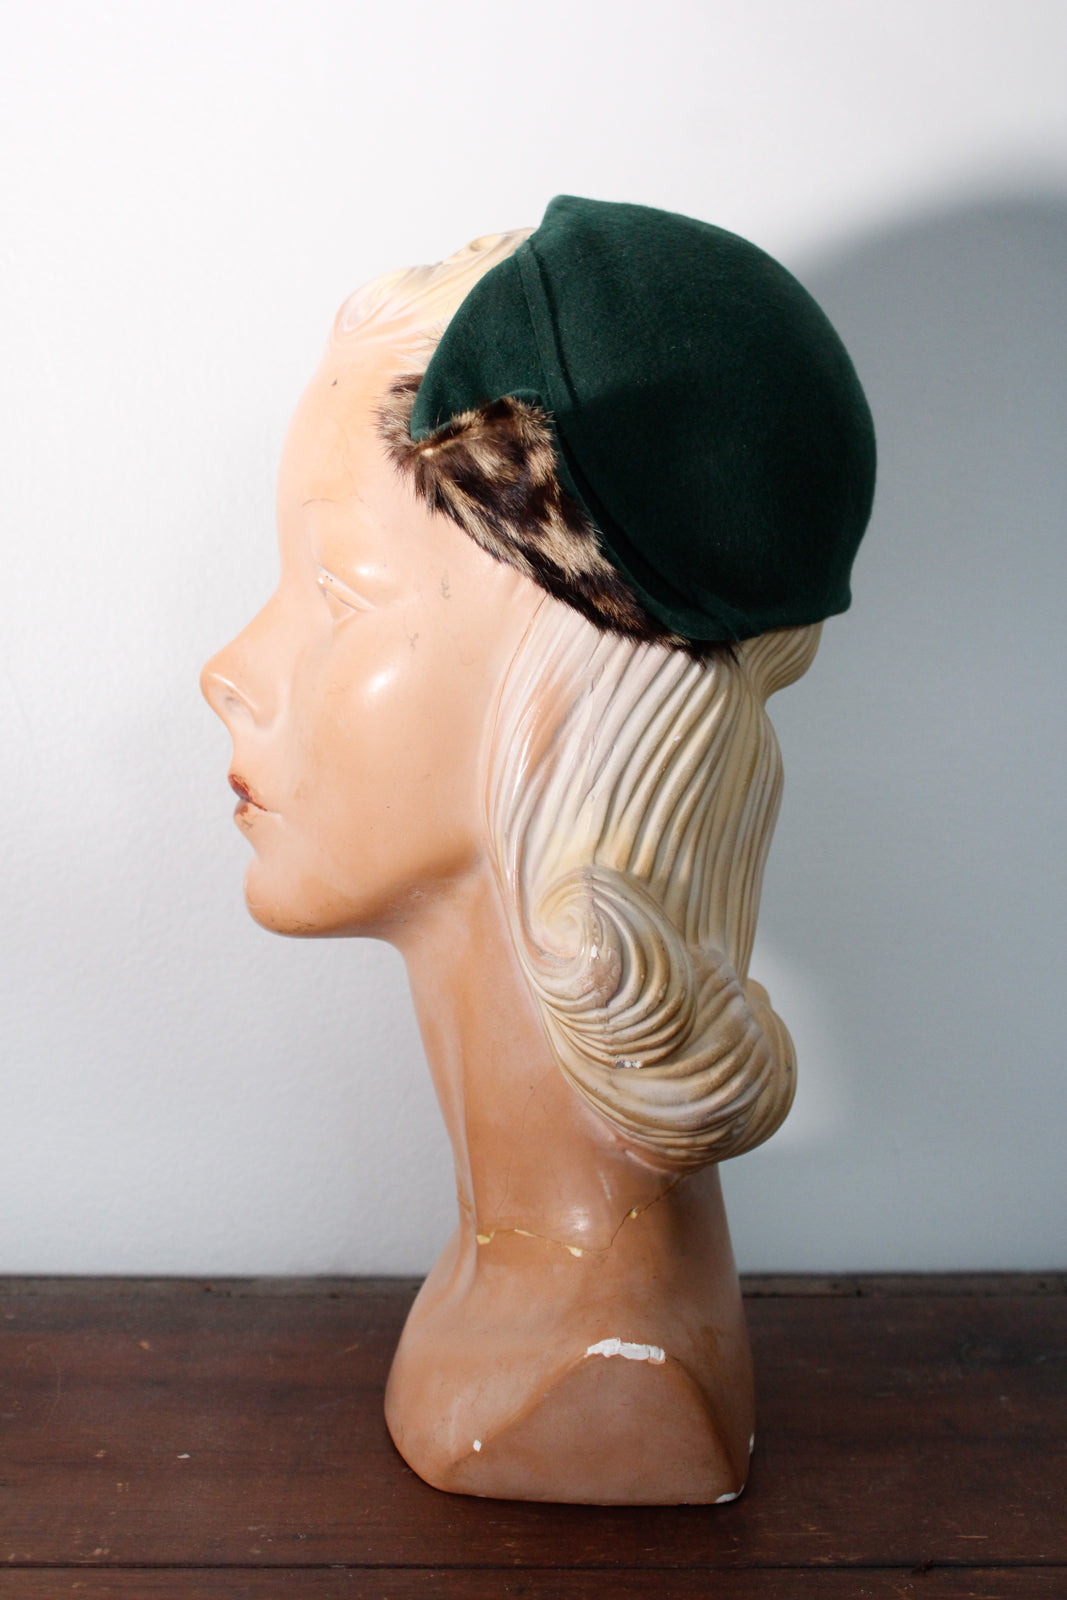 1940s Green Felt Hat with Fur